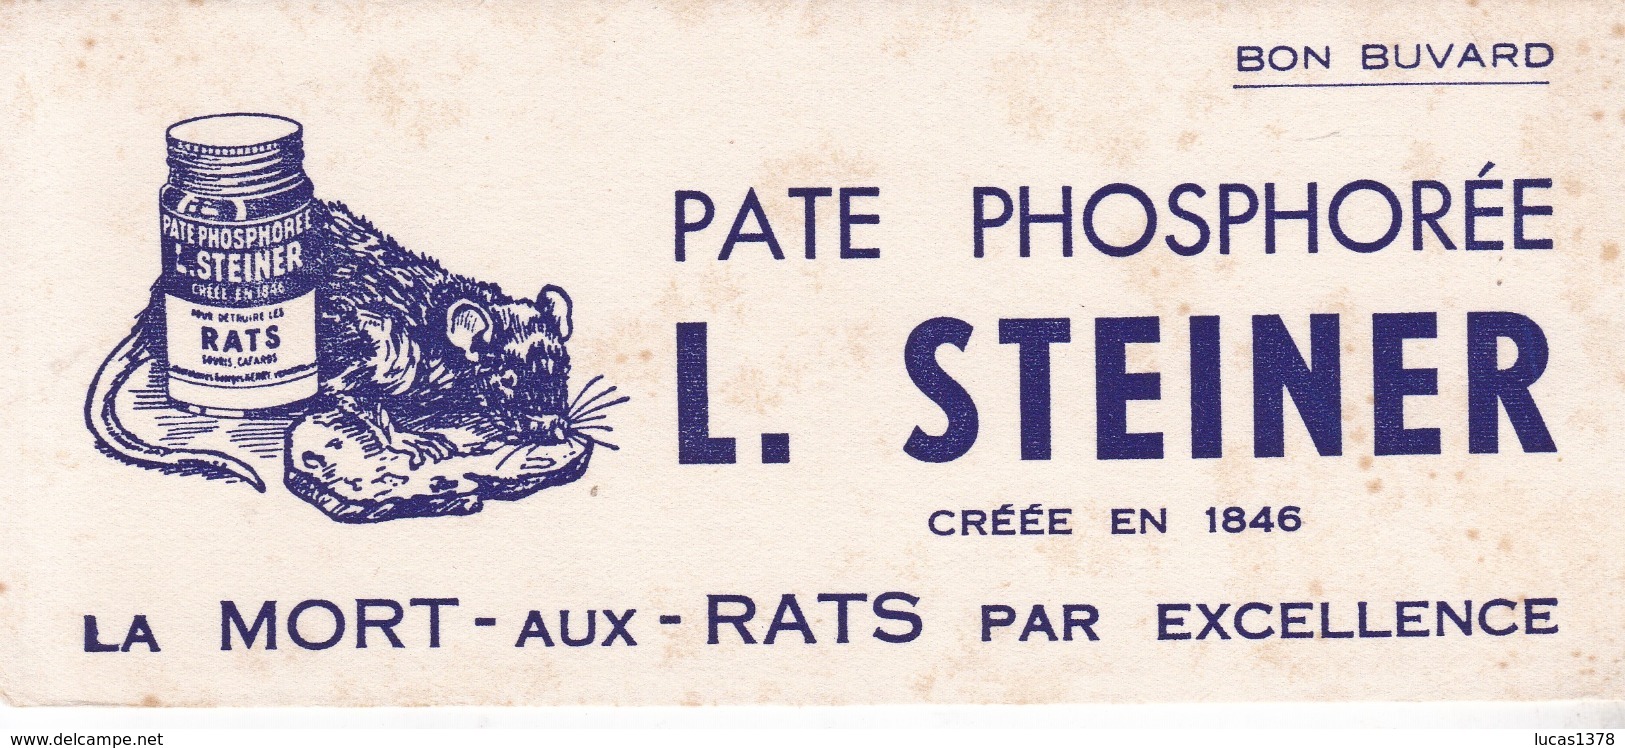 PATE PHOSPHOREE STEINER / MORT AUX RATS - Wash & Clean